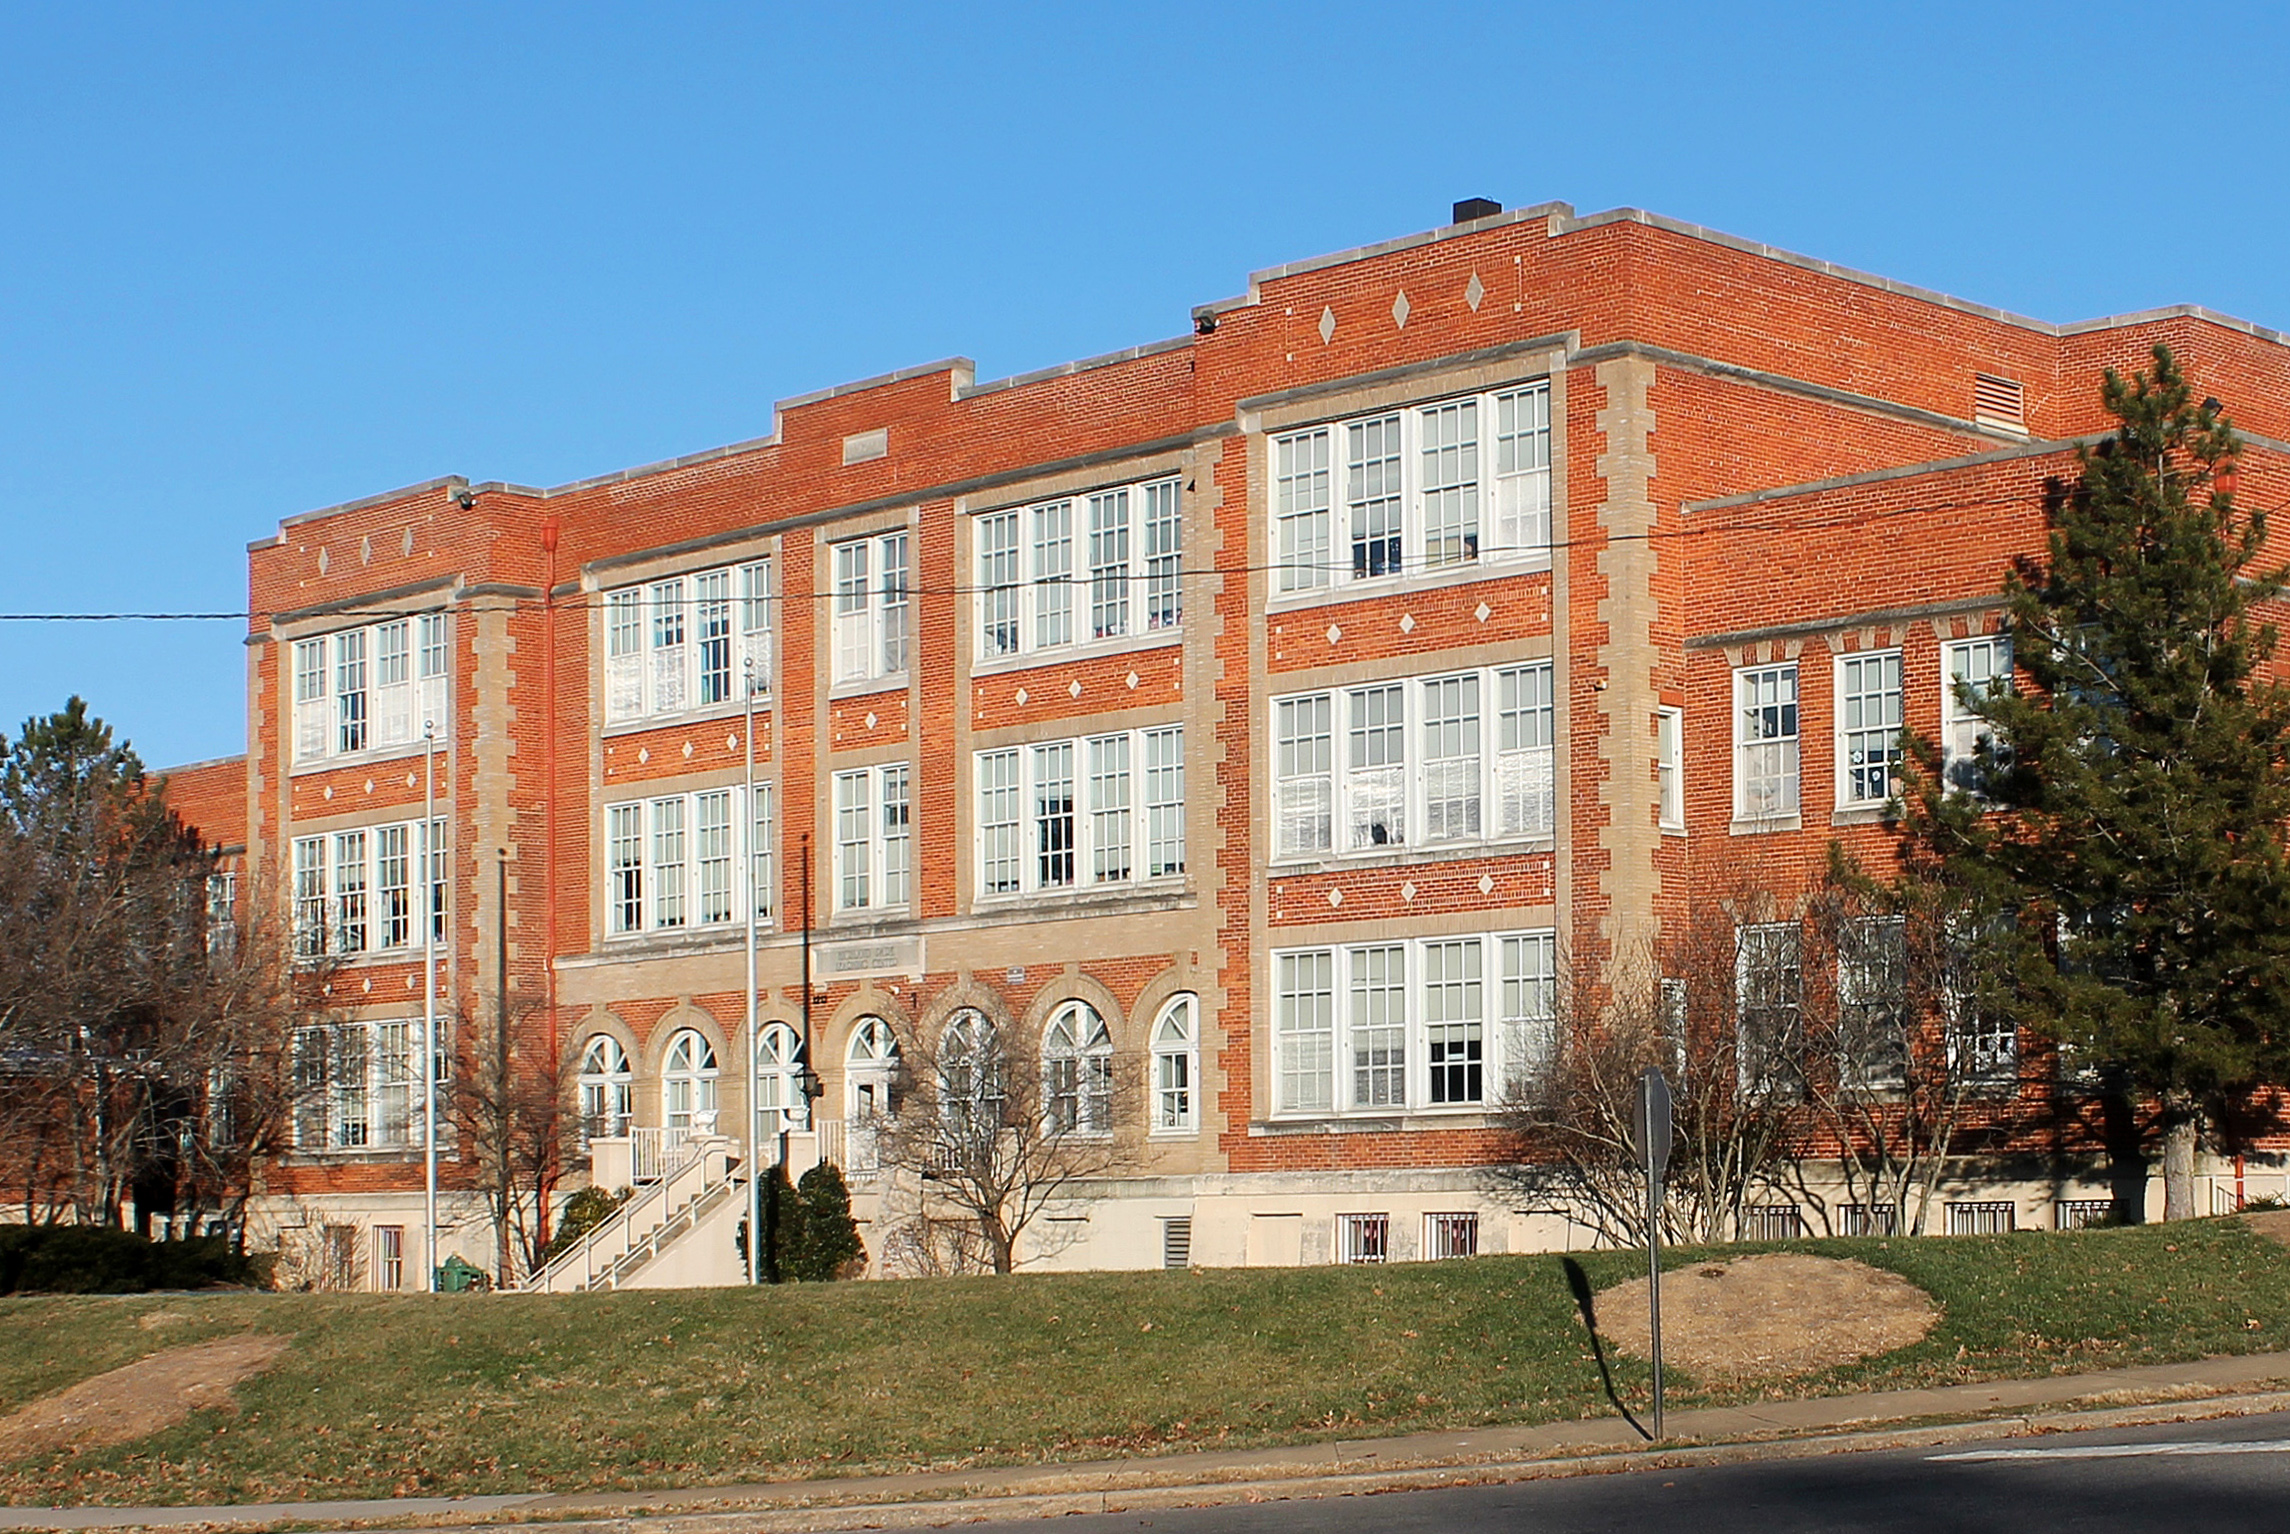 Highland Park Elementary School.